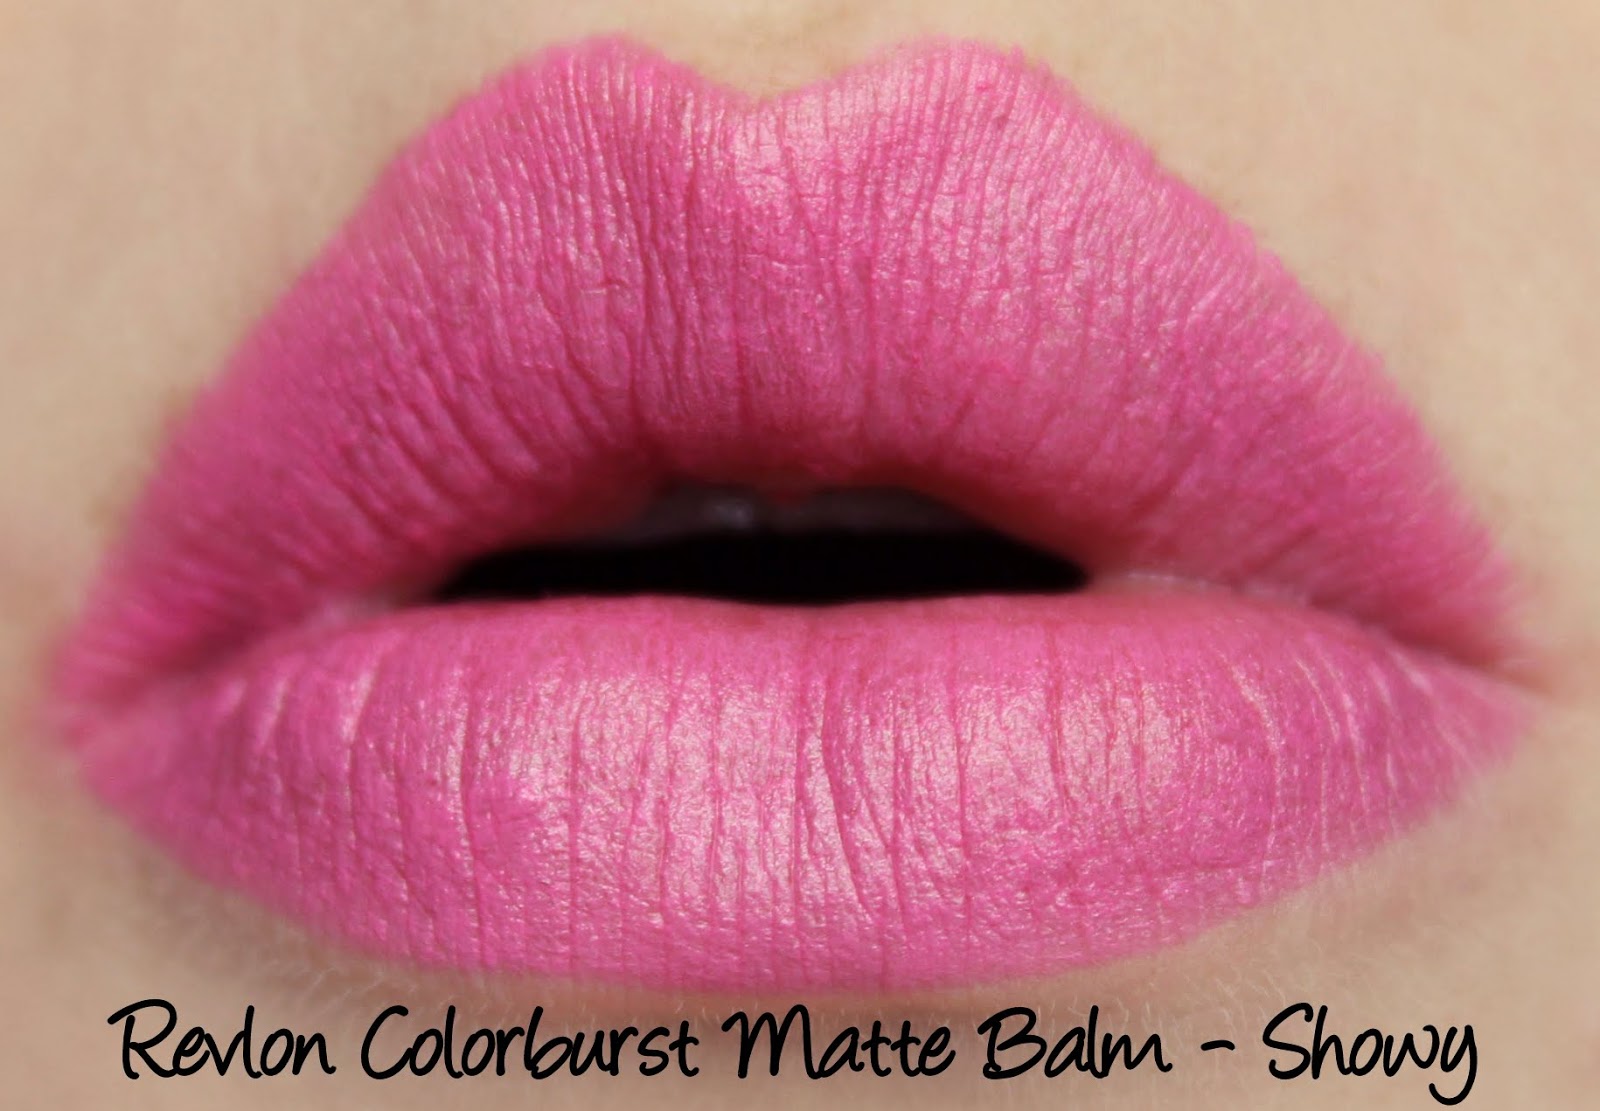 Revlon Colorburst Matte Balm - Showy Swatches & Review